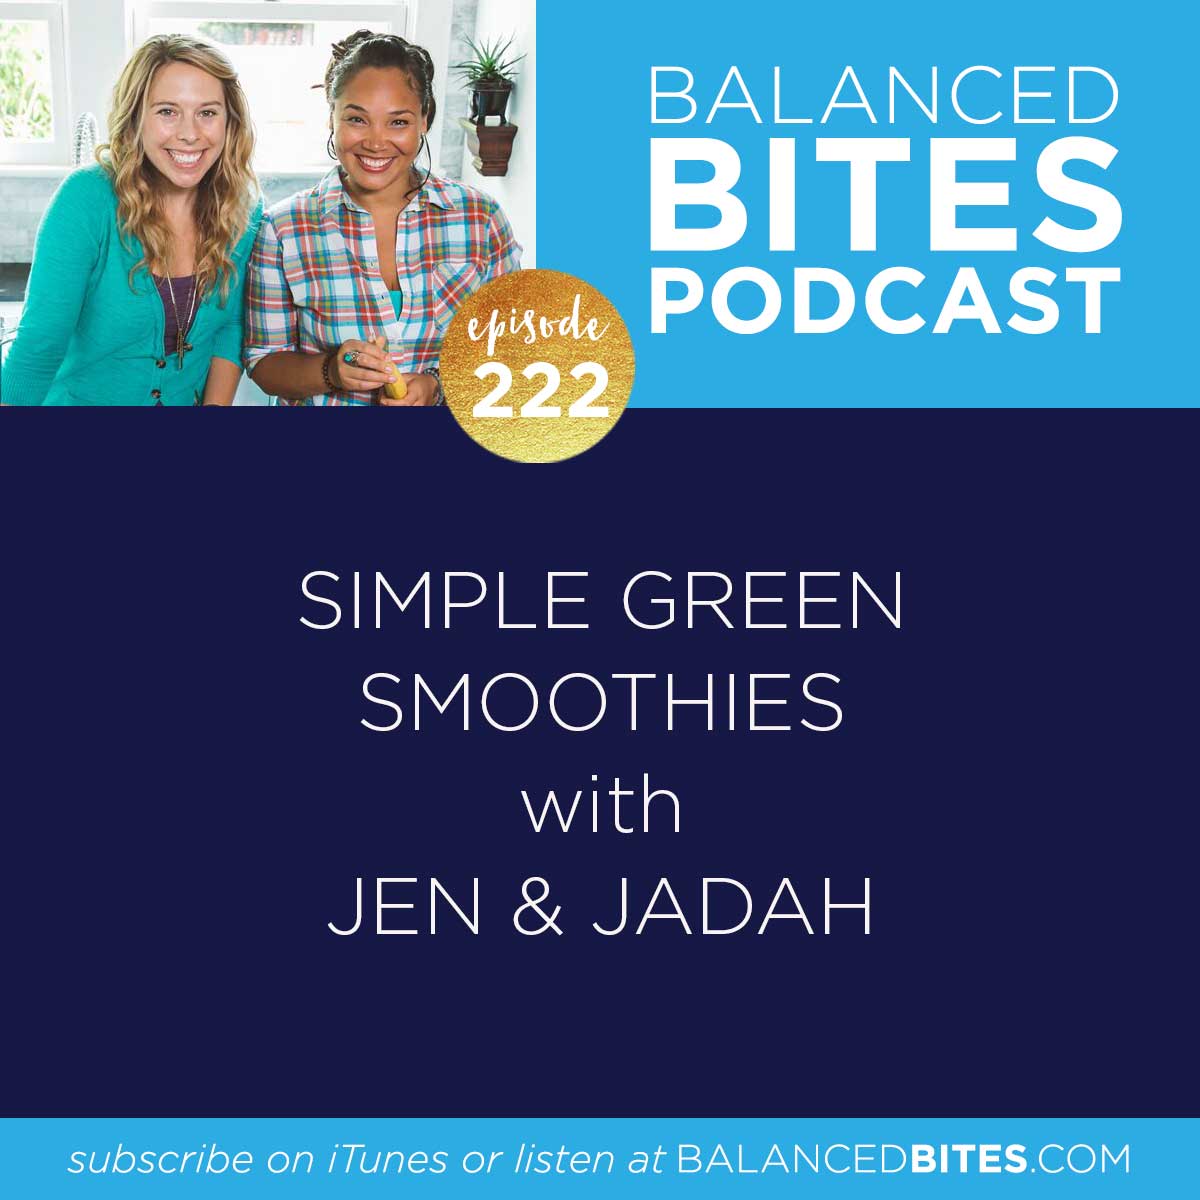 Simple Green Smoothies - Diane Sanfilippo, Lize Wolfe | Balanced Bites